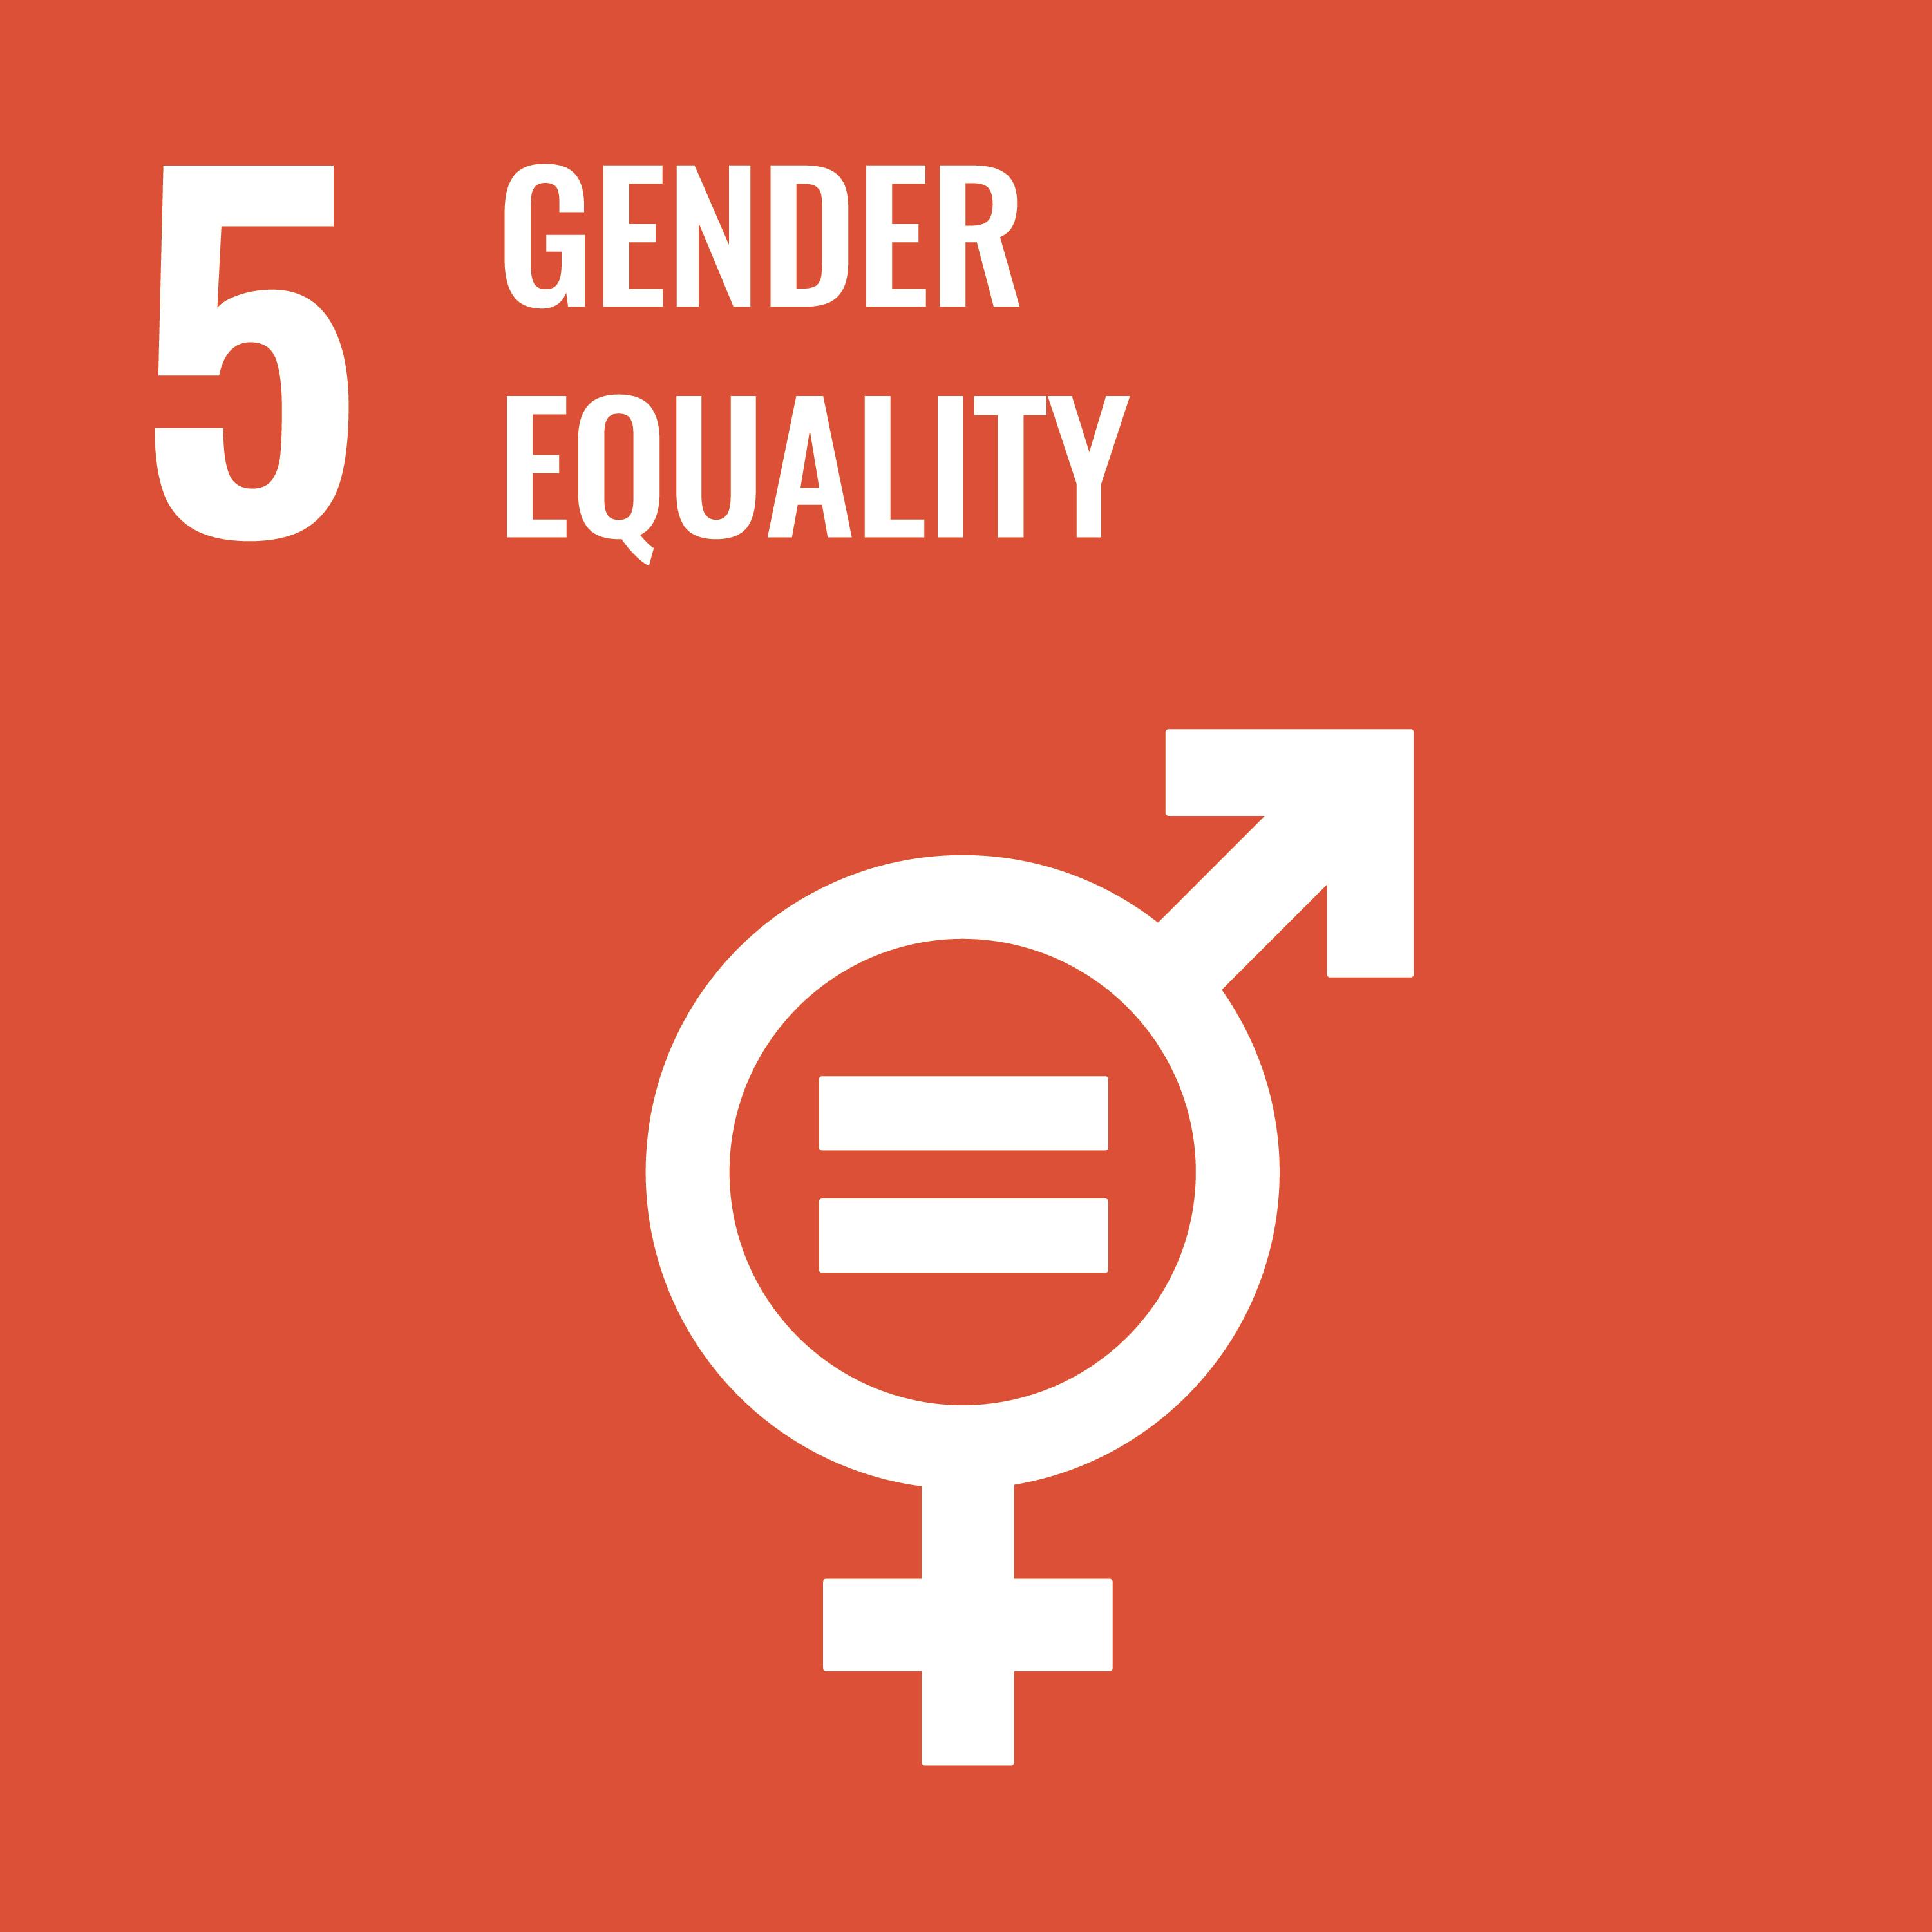 SDG5 性別平等 Gender Equality (圖片來源：聯合國 SDGs Communications materials)